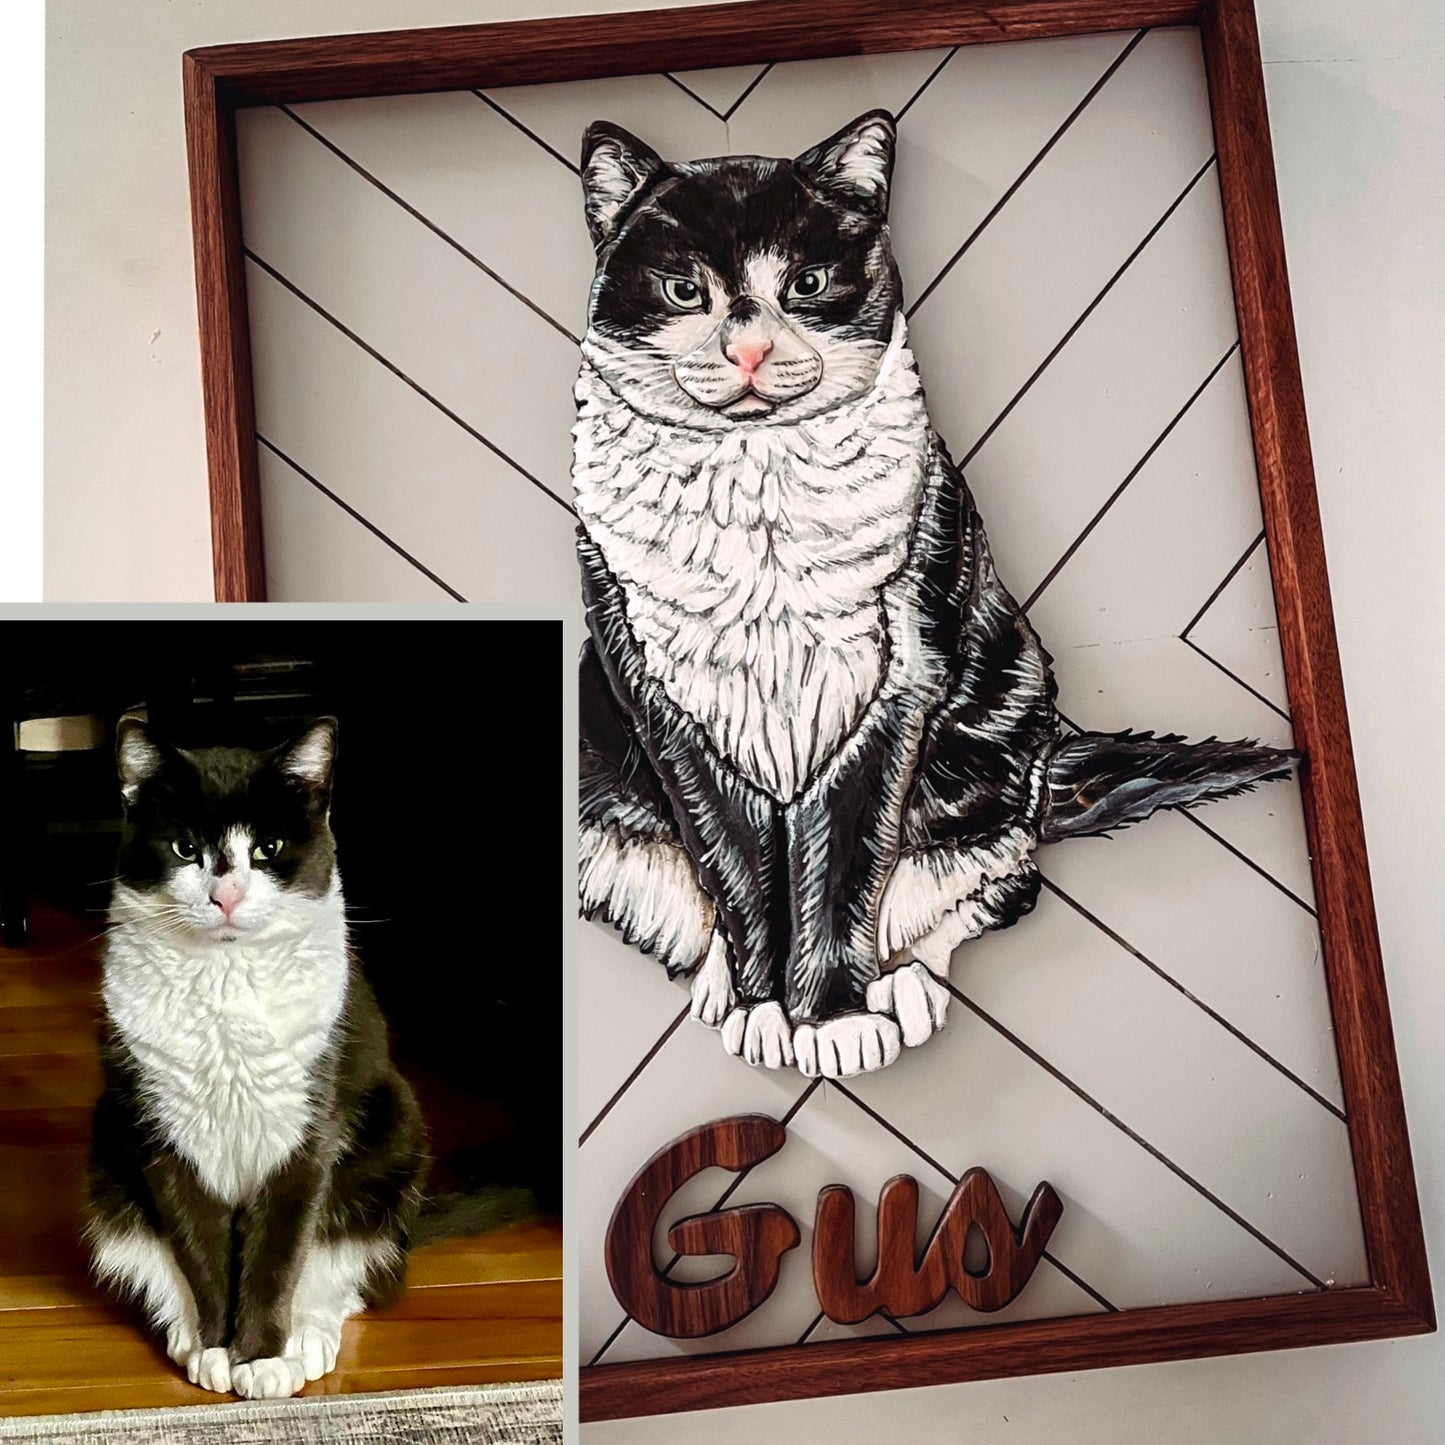 Custom Pet Portrait ( Painted Mosaic Backer )